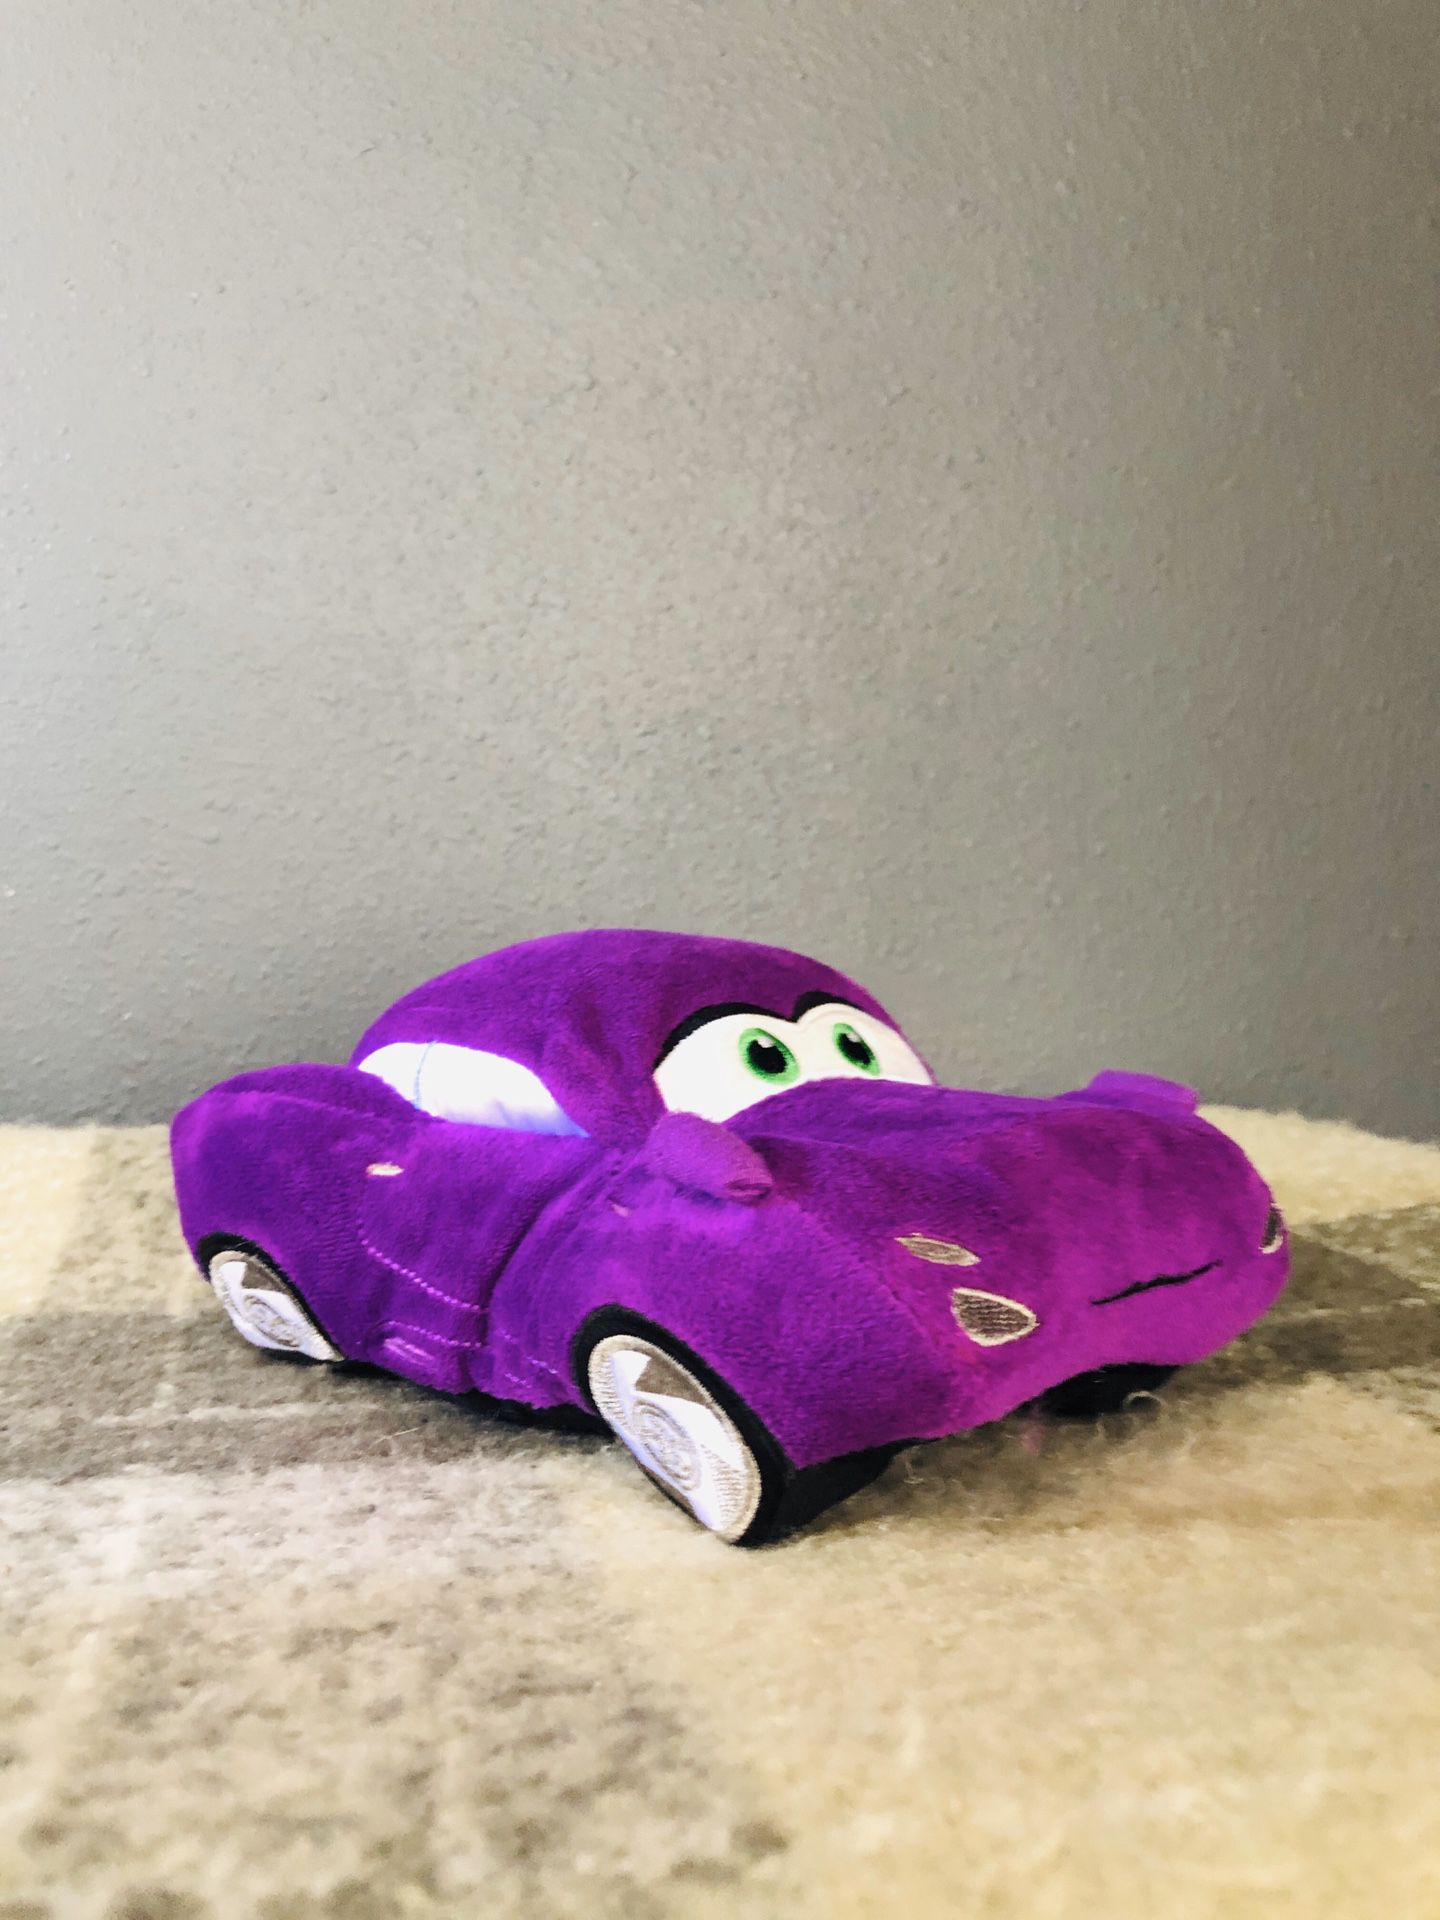 Disney cars movie plush purple stuffed animal